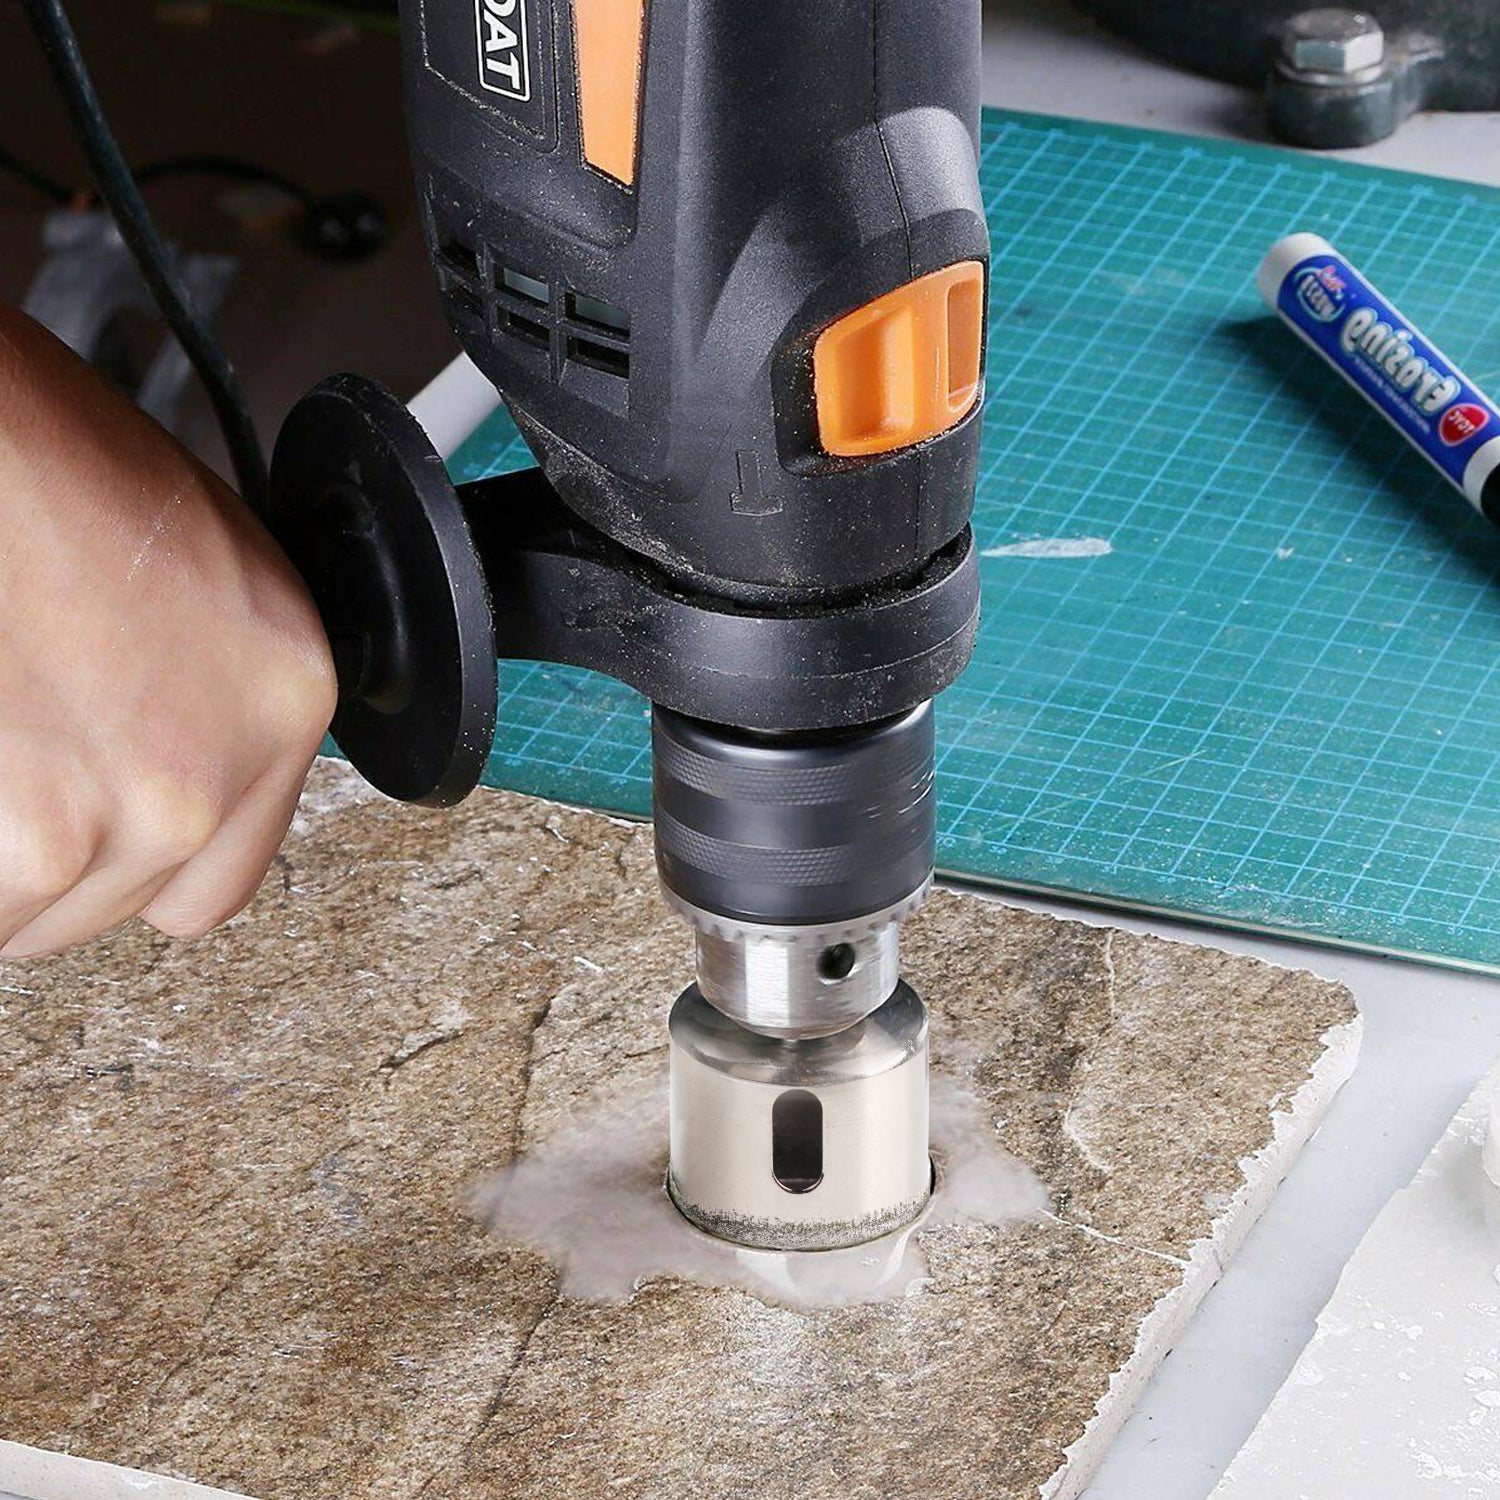 22mm Diamond Hole Saw Kit Tile Drill Bits for Ceramic, Glass, Tile, Porcelain, Marble, Granite